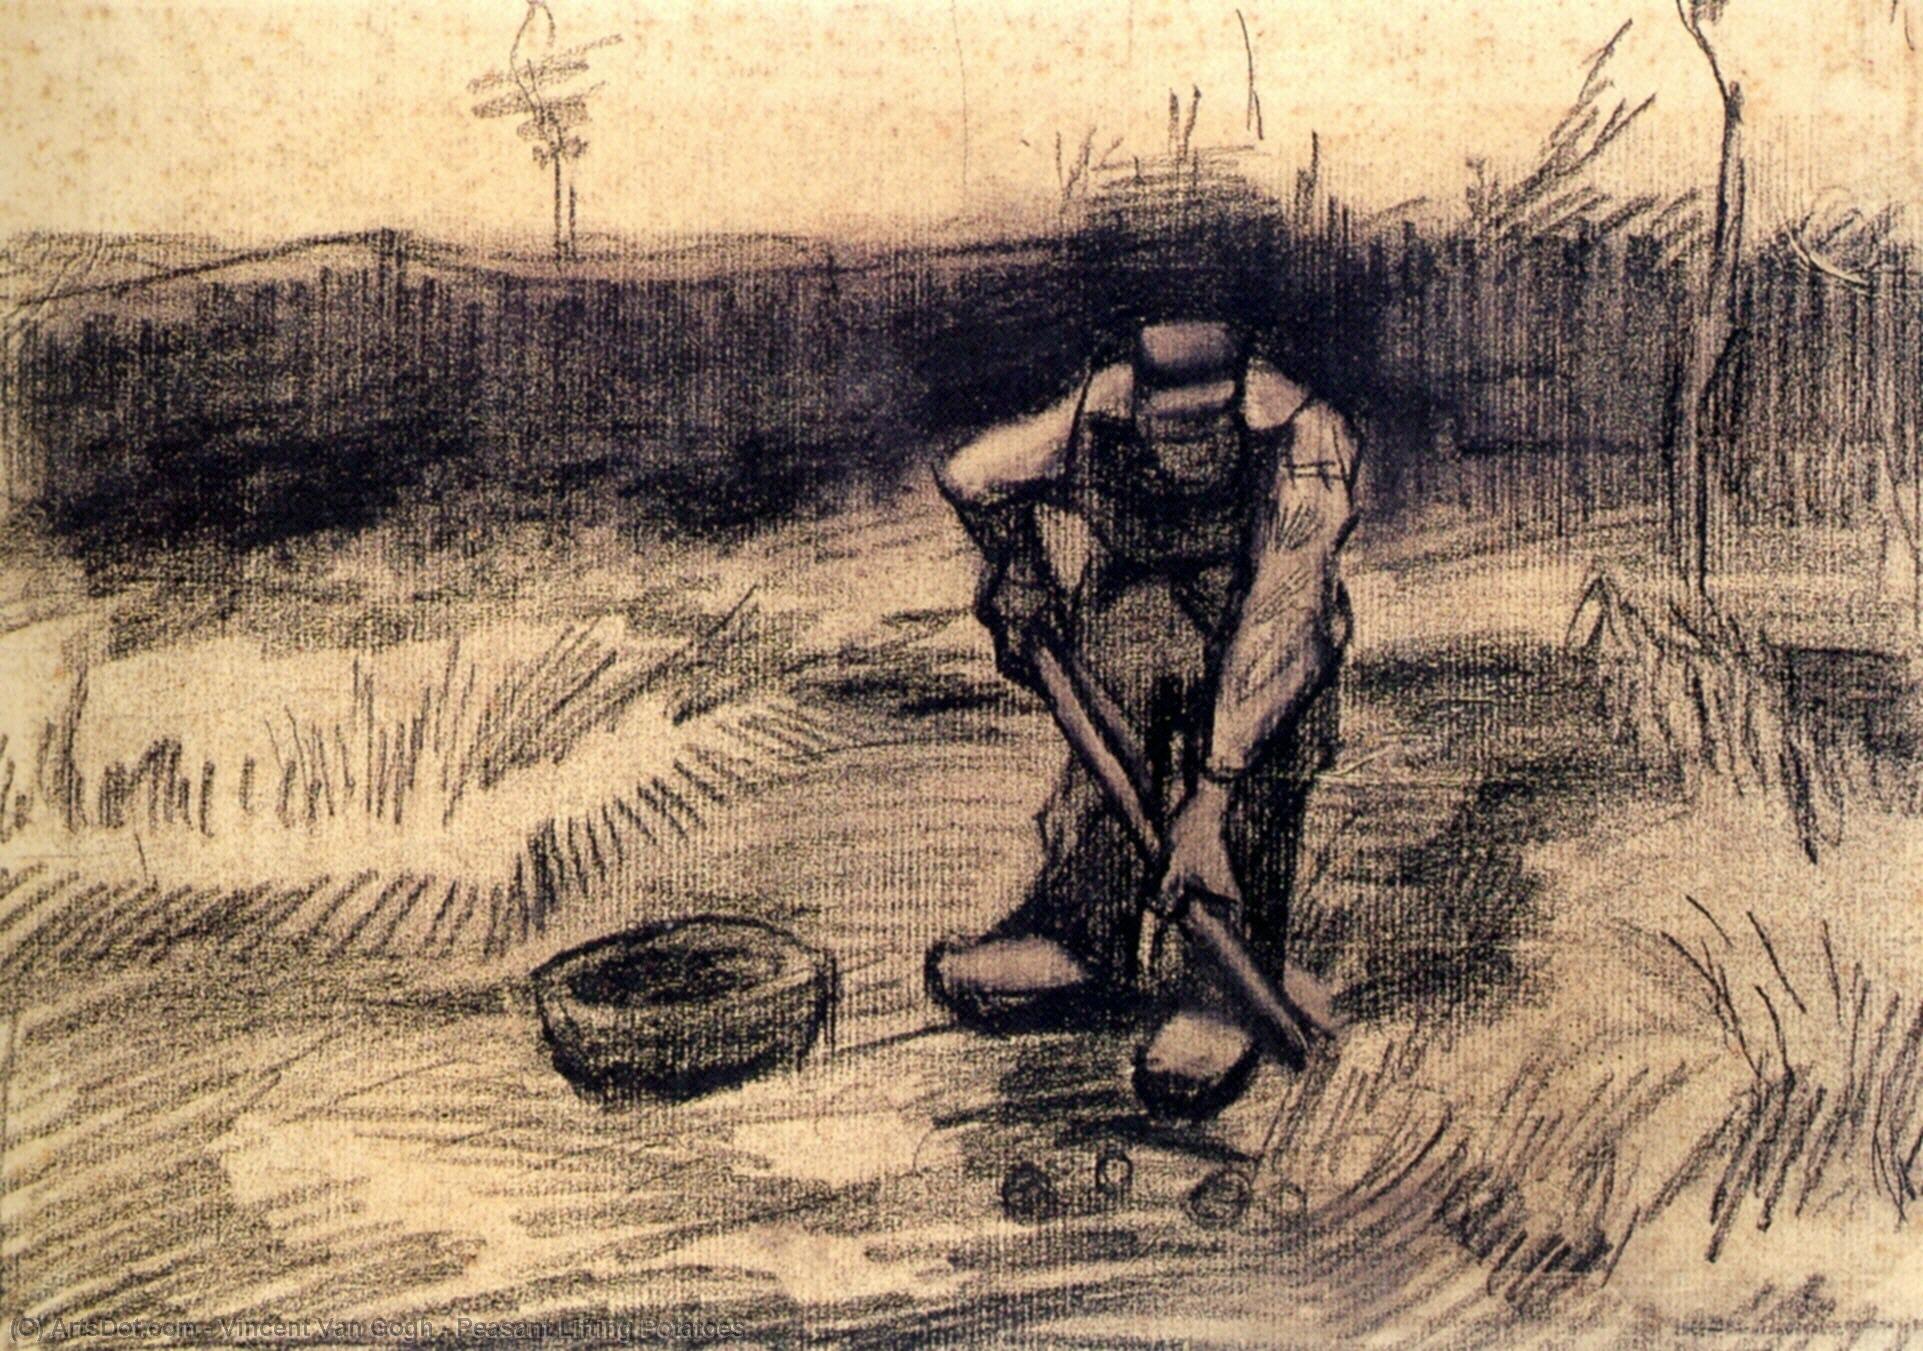 WikiOO.org - Encyclopedia of Fine Arts - Lukisan, Artwork Vincent Van Gogh - Peasant Lifting Potatoes